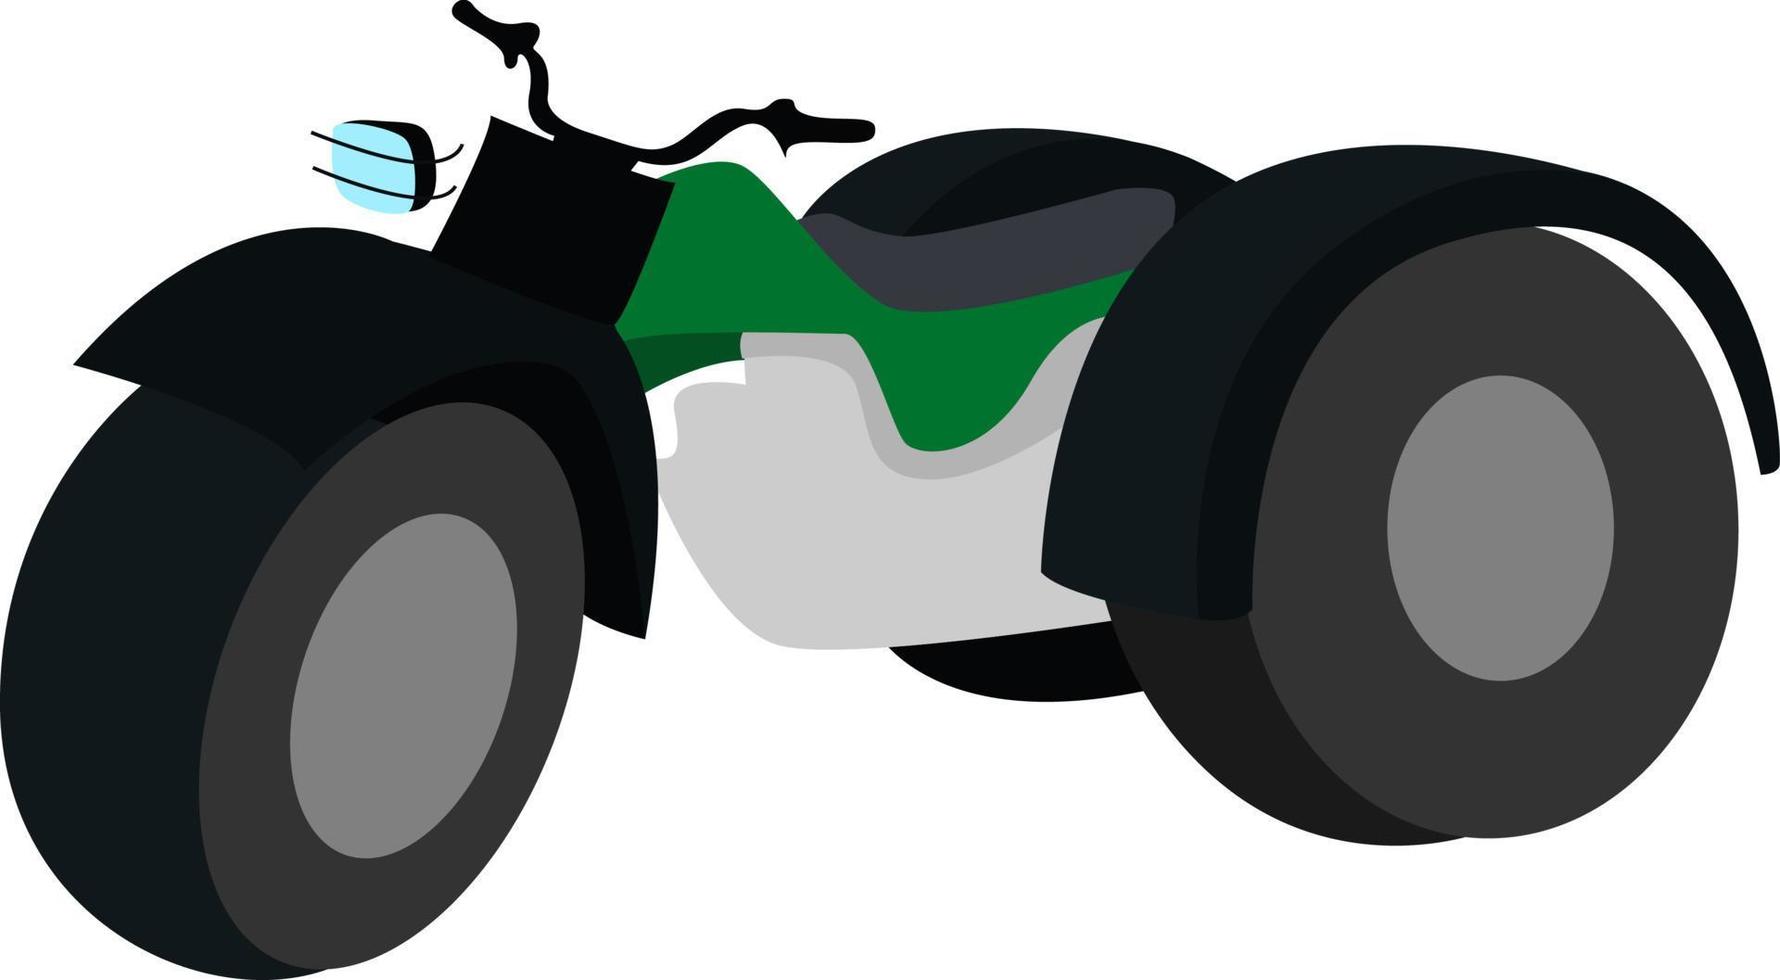 Green terrain vehicle, illustration, vector on white background.